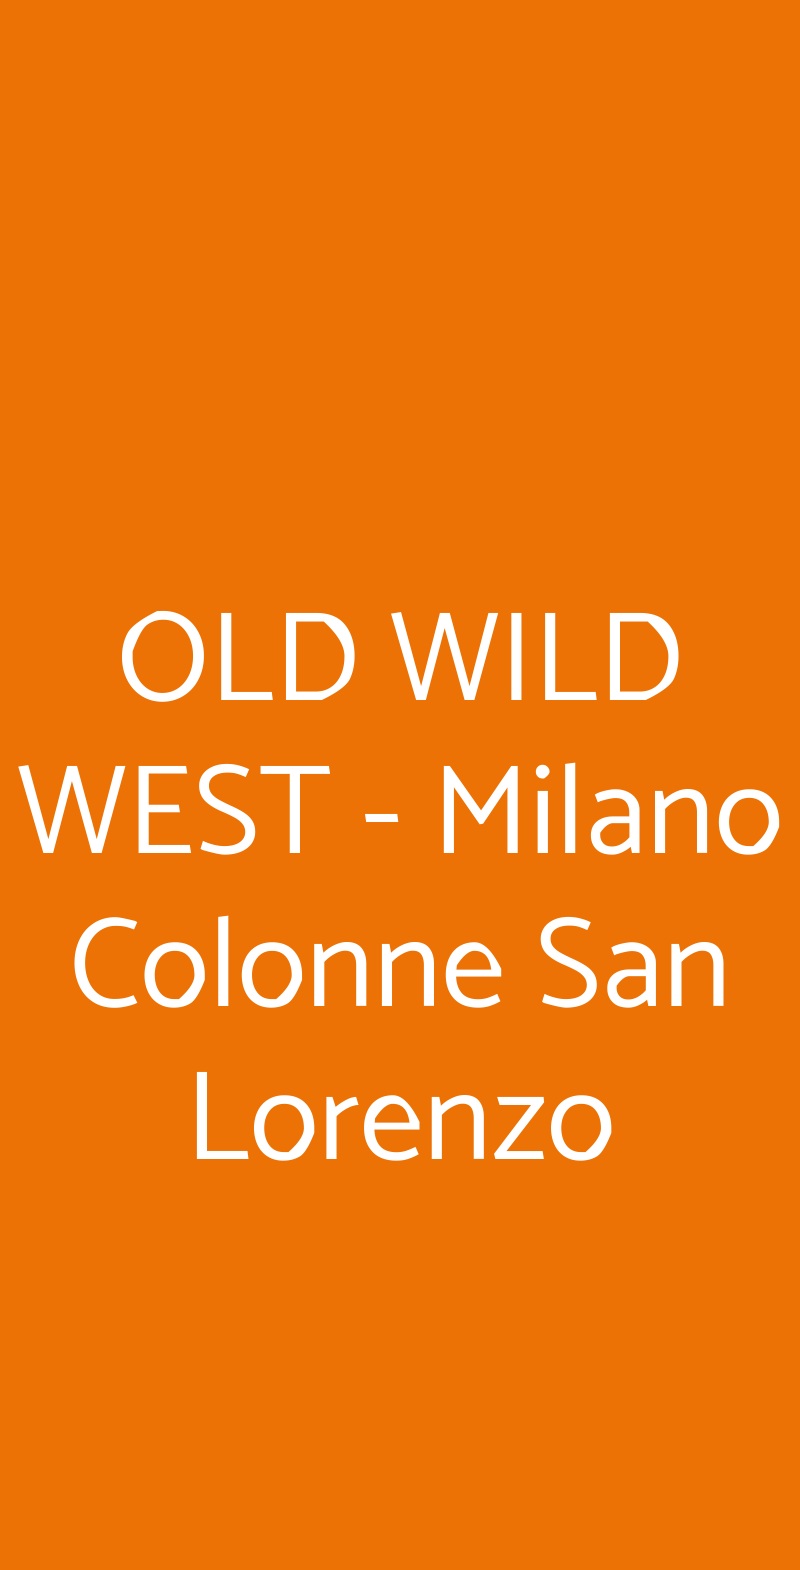 OLD WILD WEST - Milano Colonne San Lorenzo Milano menù 1 pagina